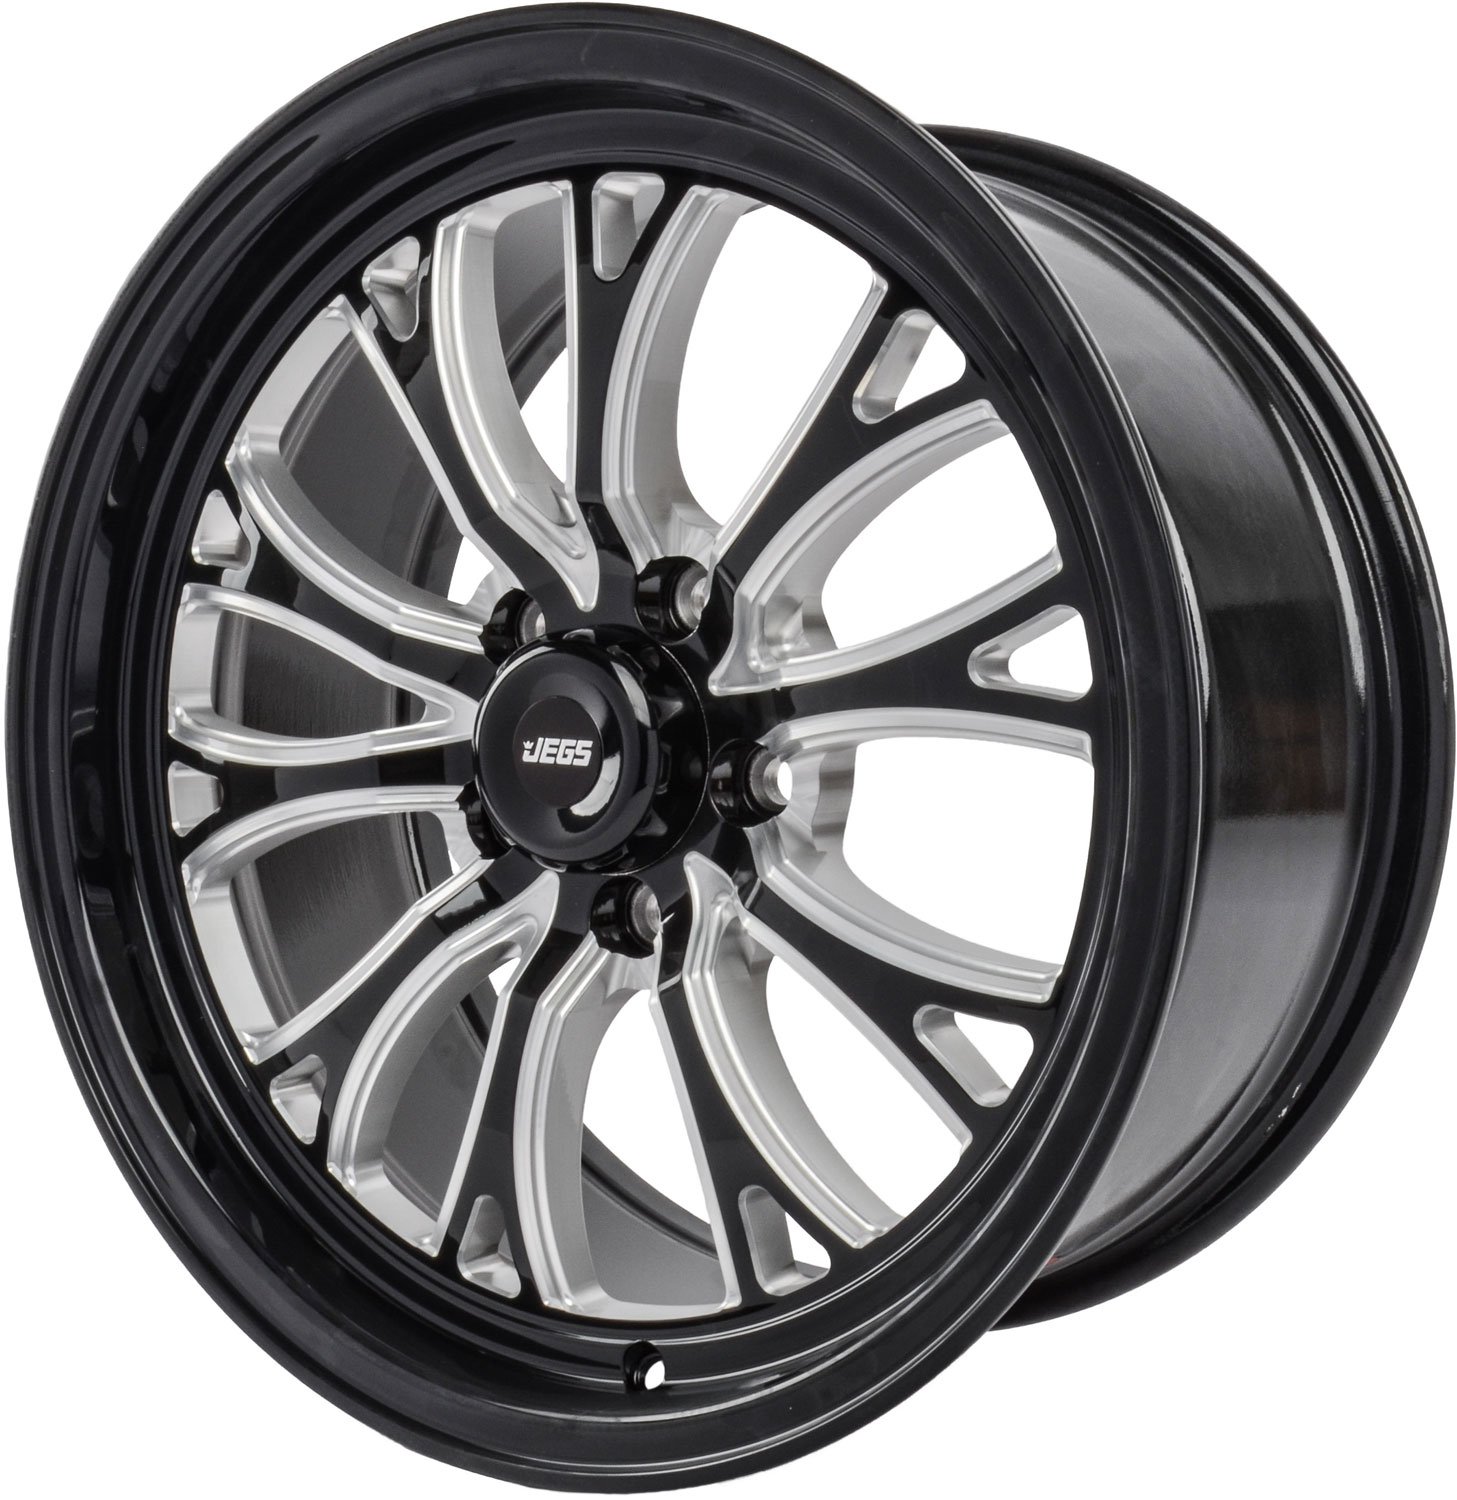 SSR Spike Wheel [Size: 17" x 8"] Gloss Black